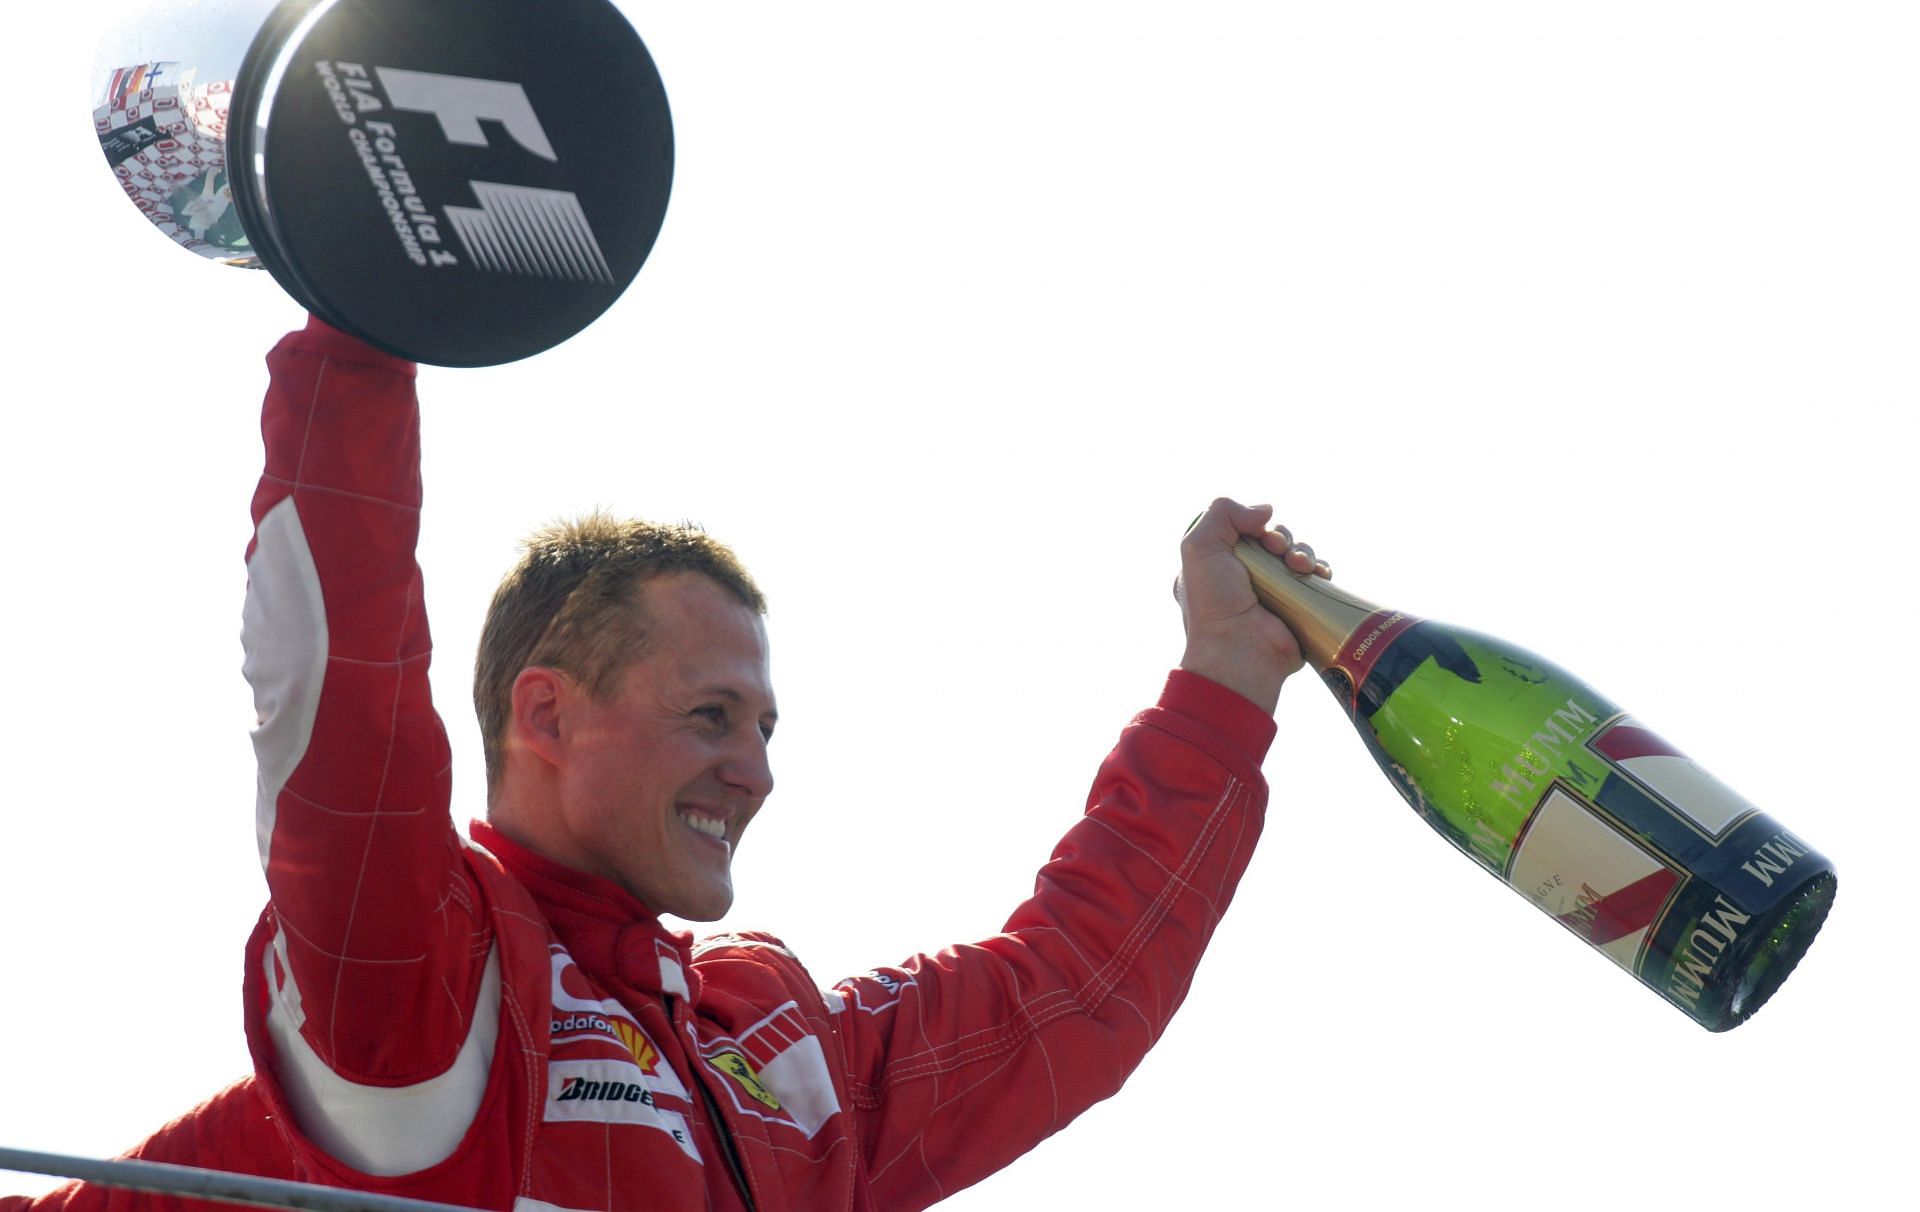 Michael Schumacher won five world championships with Ferrari